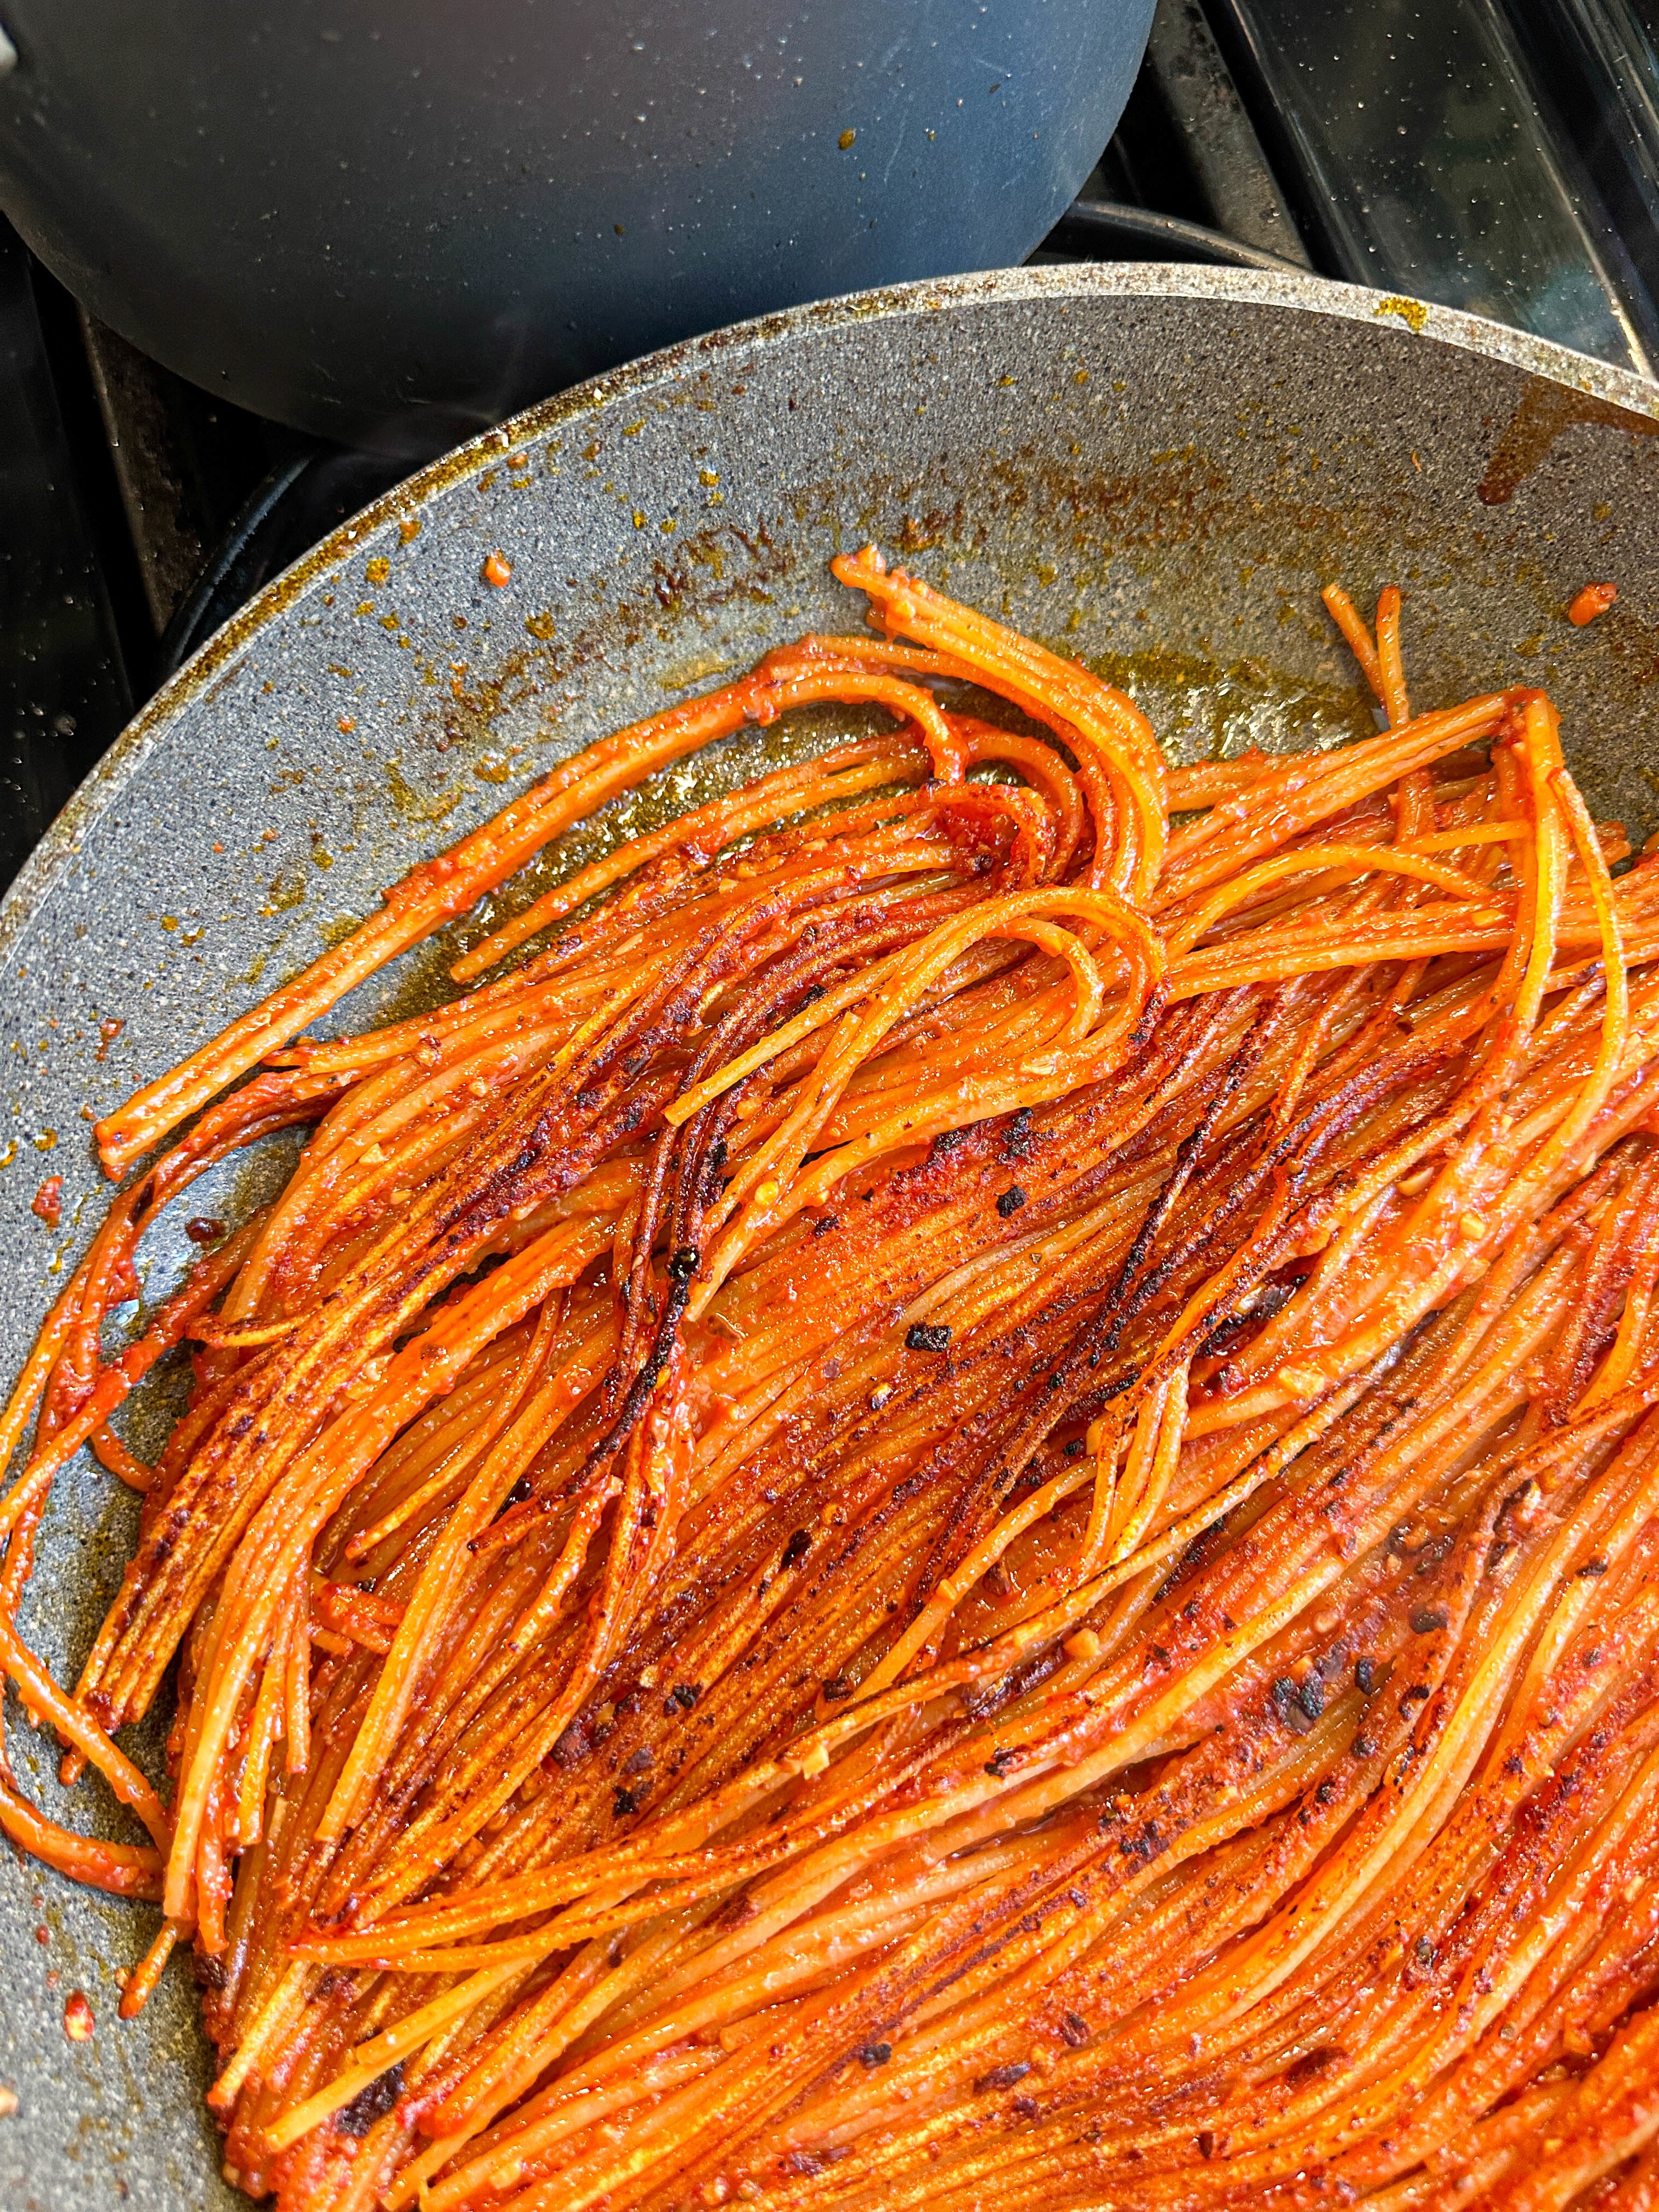 Charred spaghetti pieces in a skillet